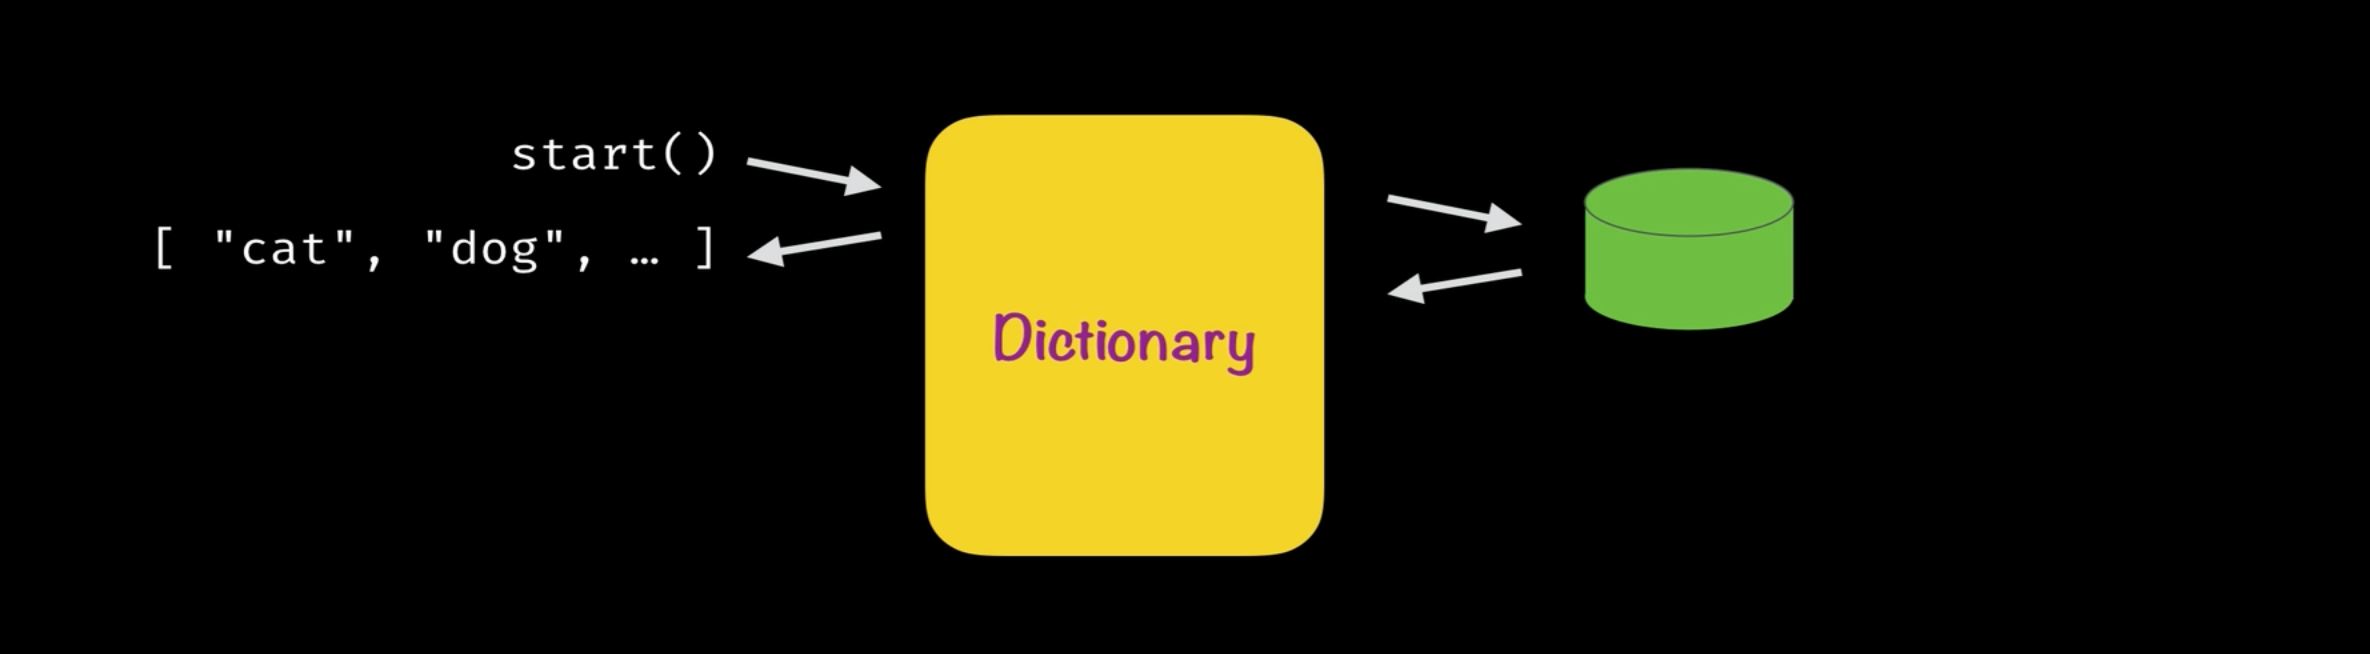 Dictionary architecture diagram 1